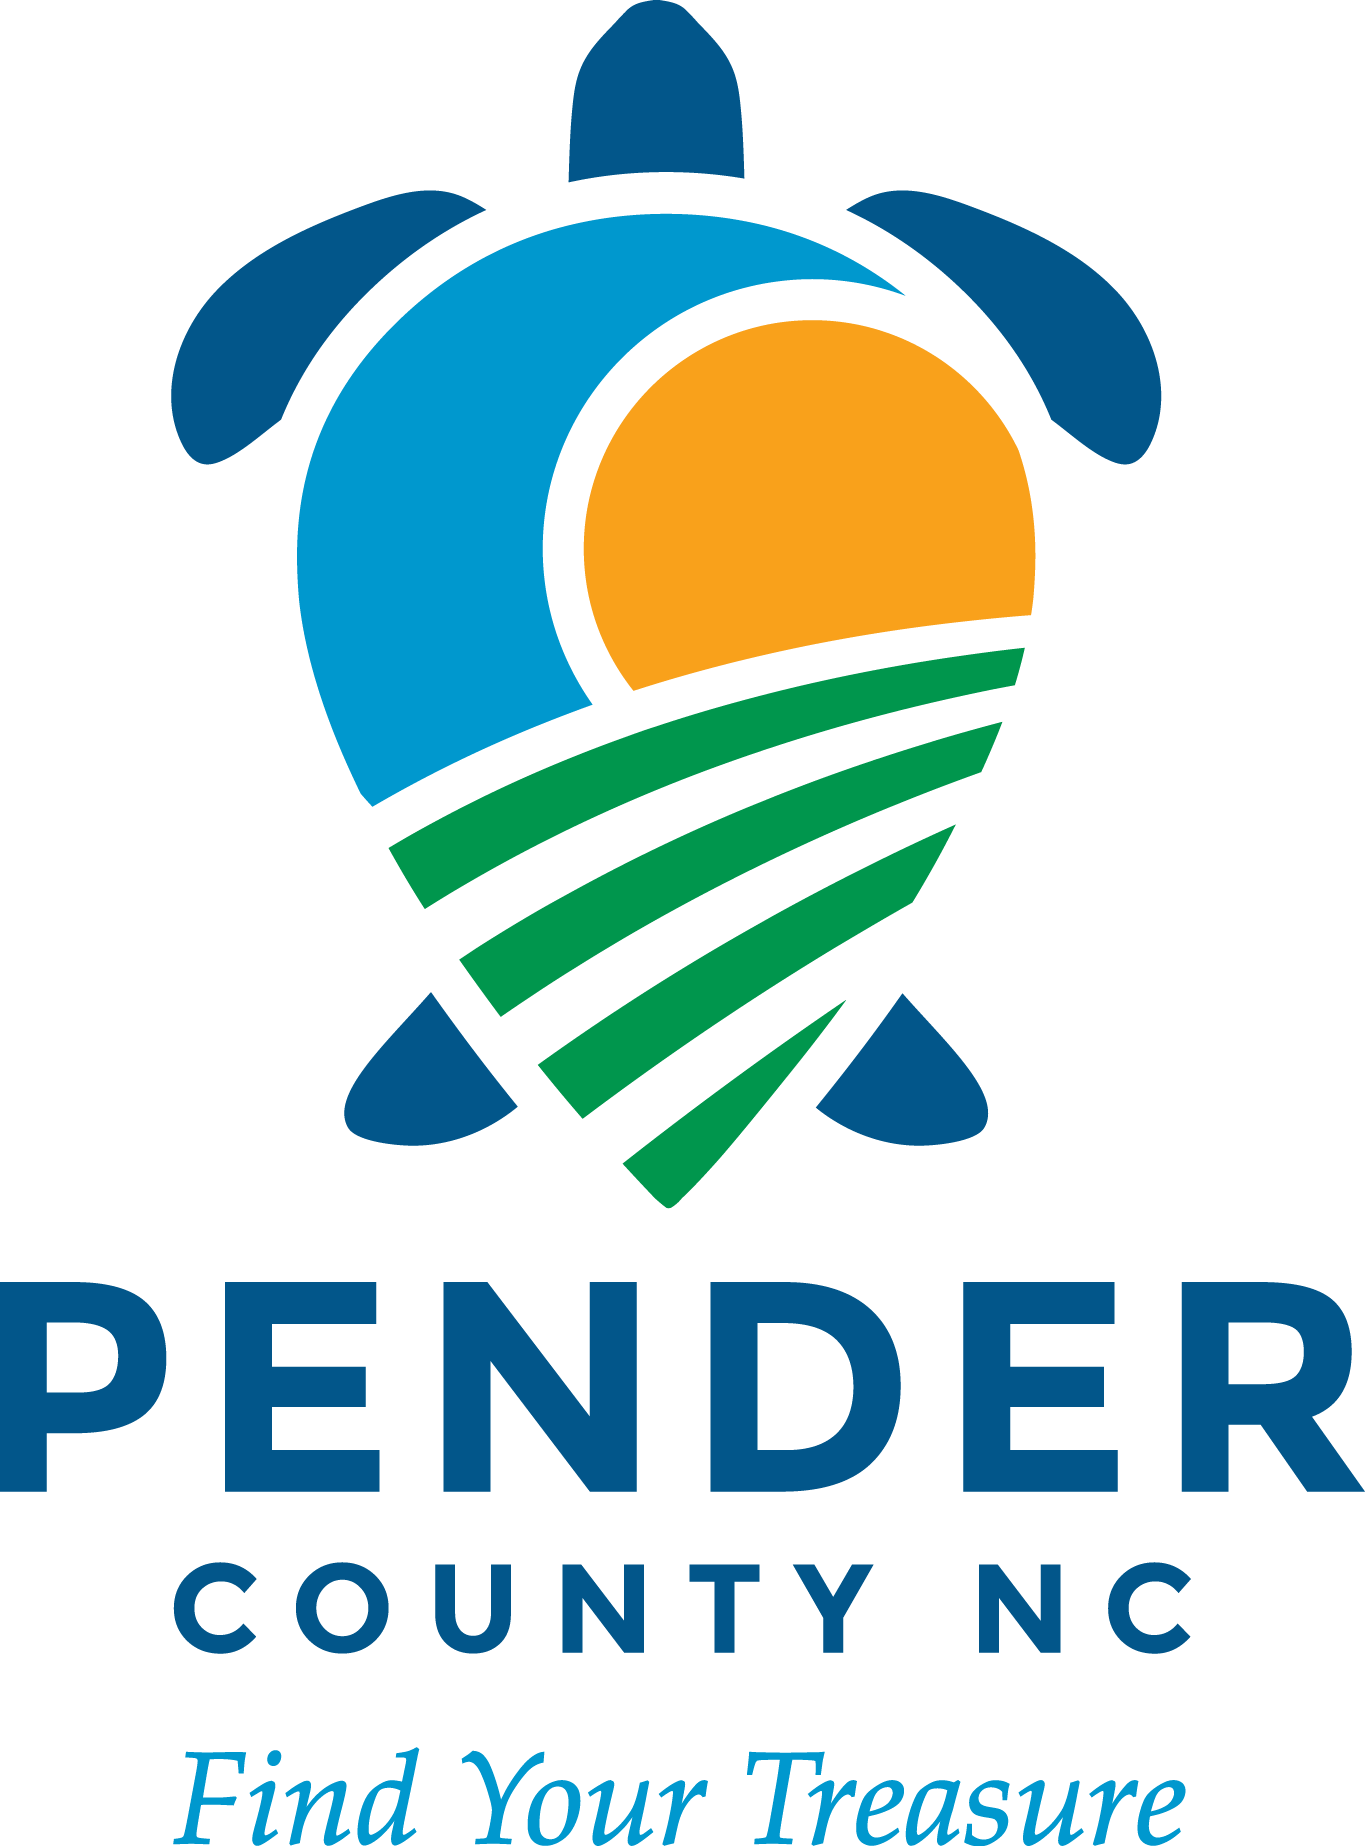 Visit Pender